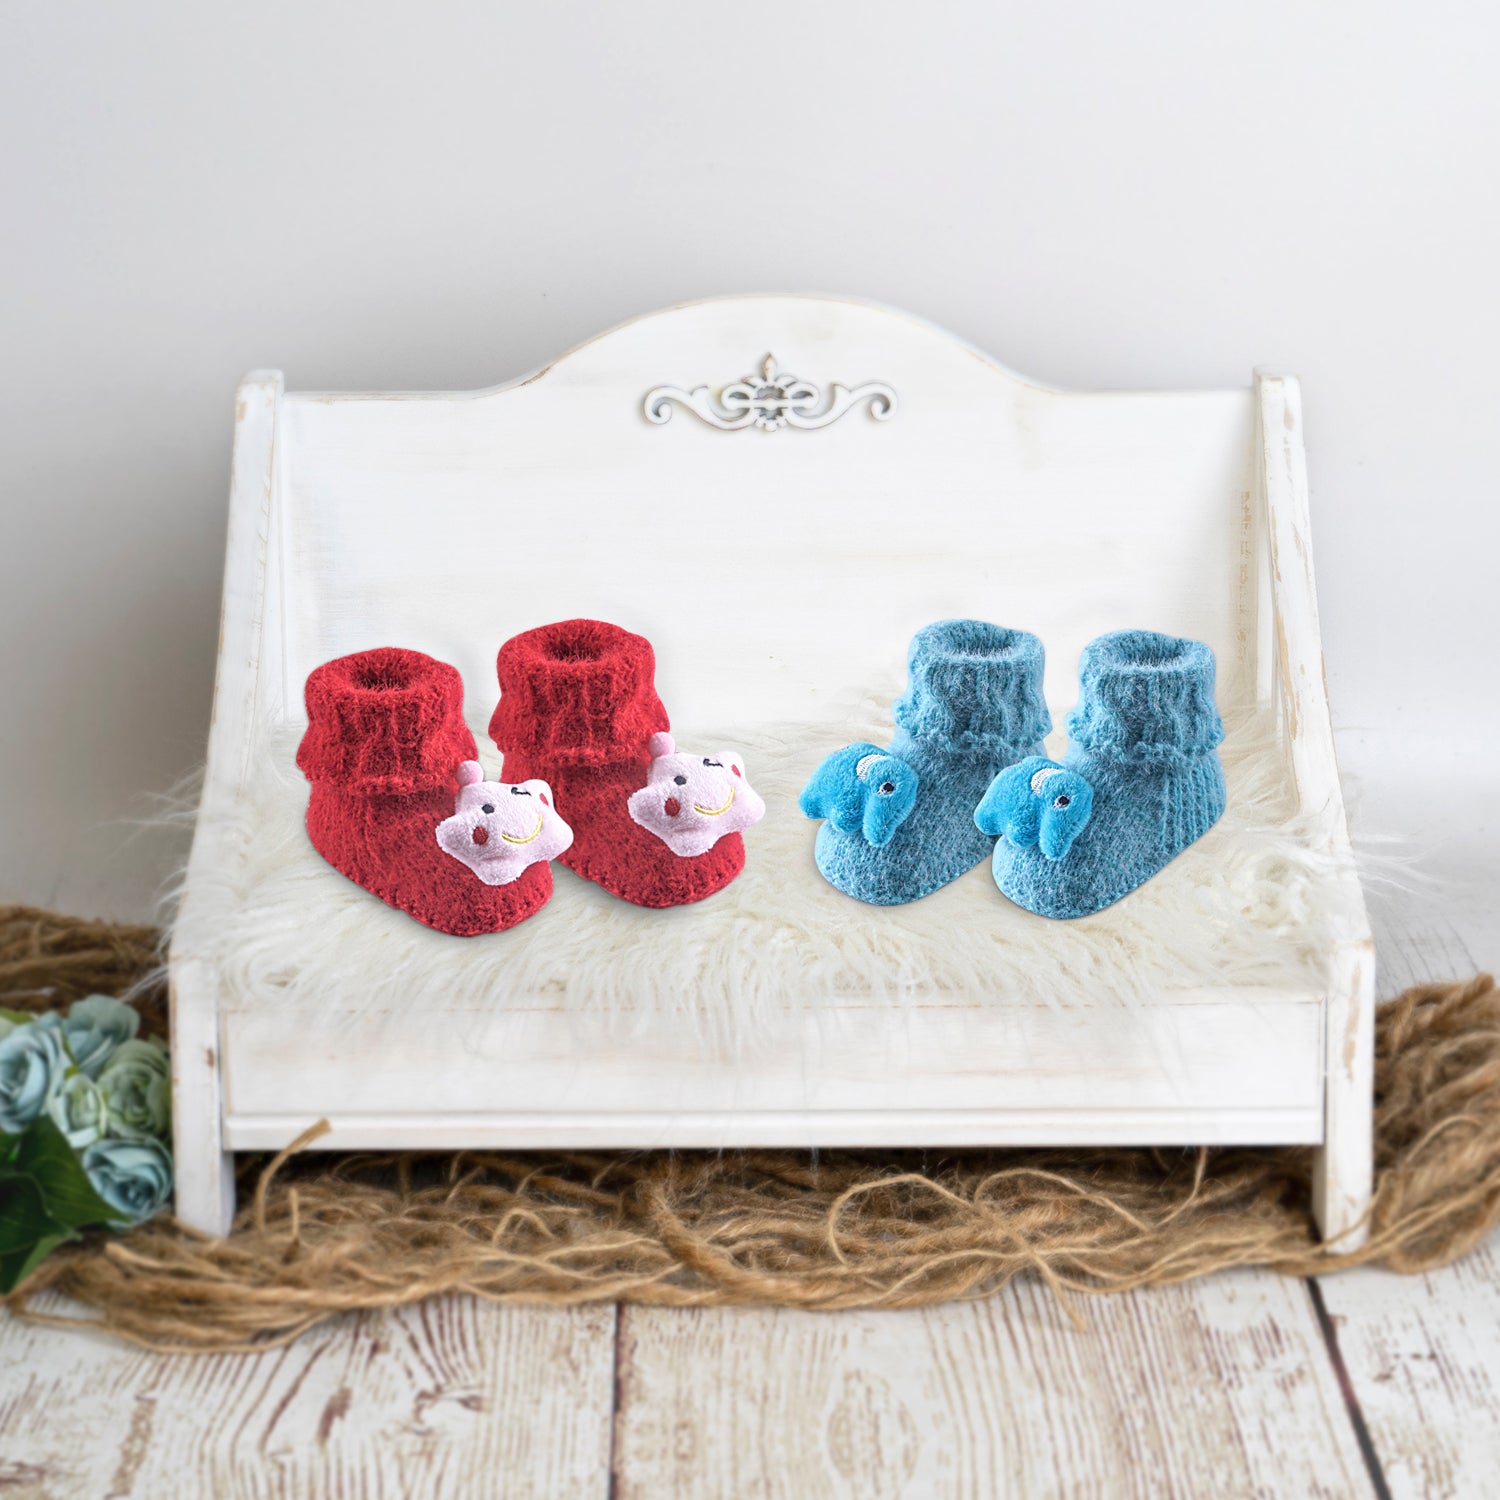 Baby Moo Newborn Crochet Woollen Booties Star Elephant - Blue, Red